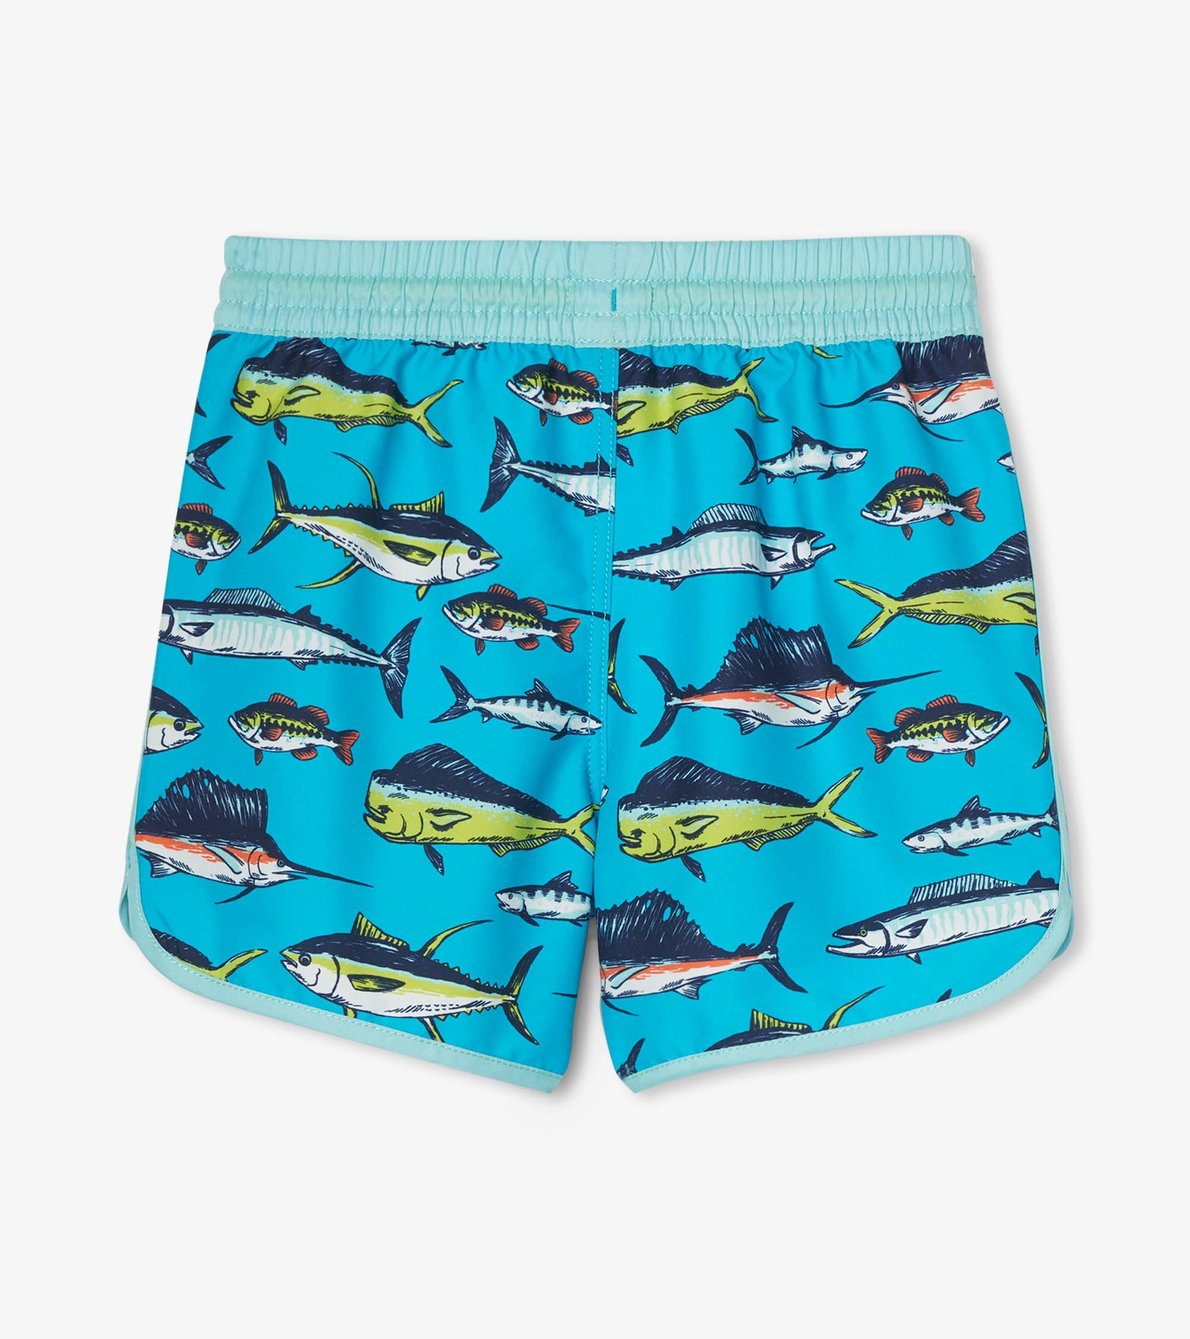 View larger image of Cool Fish Swim Shorts